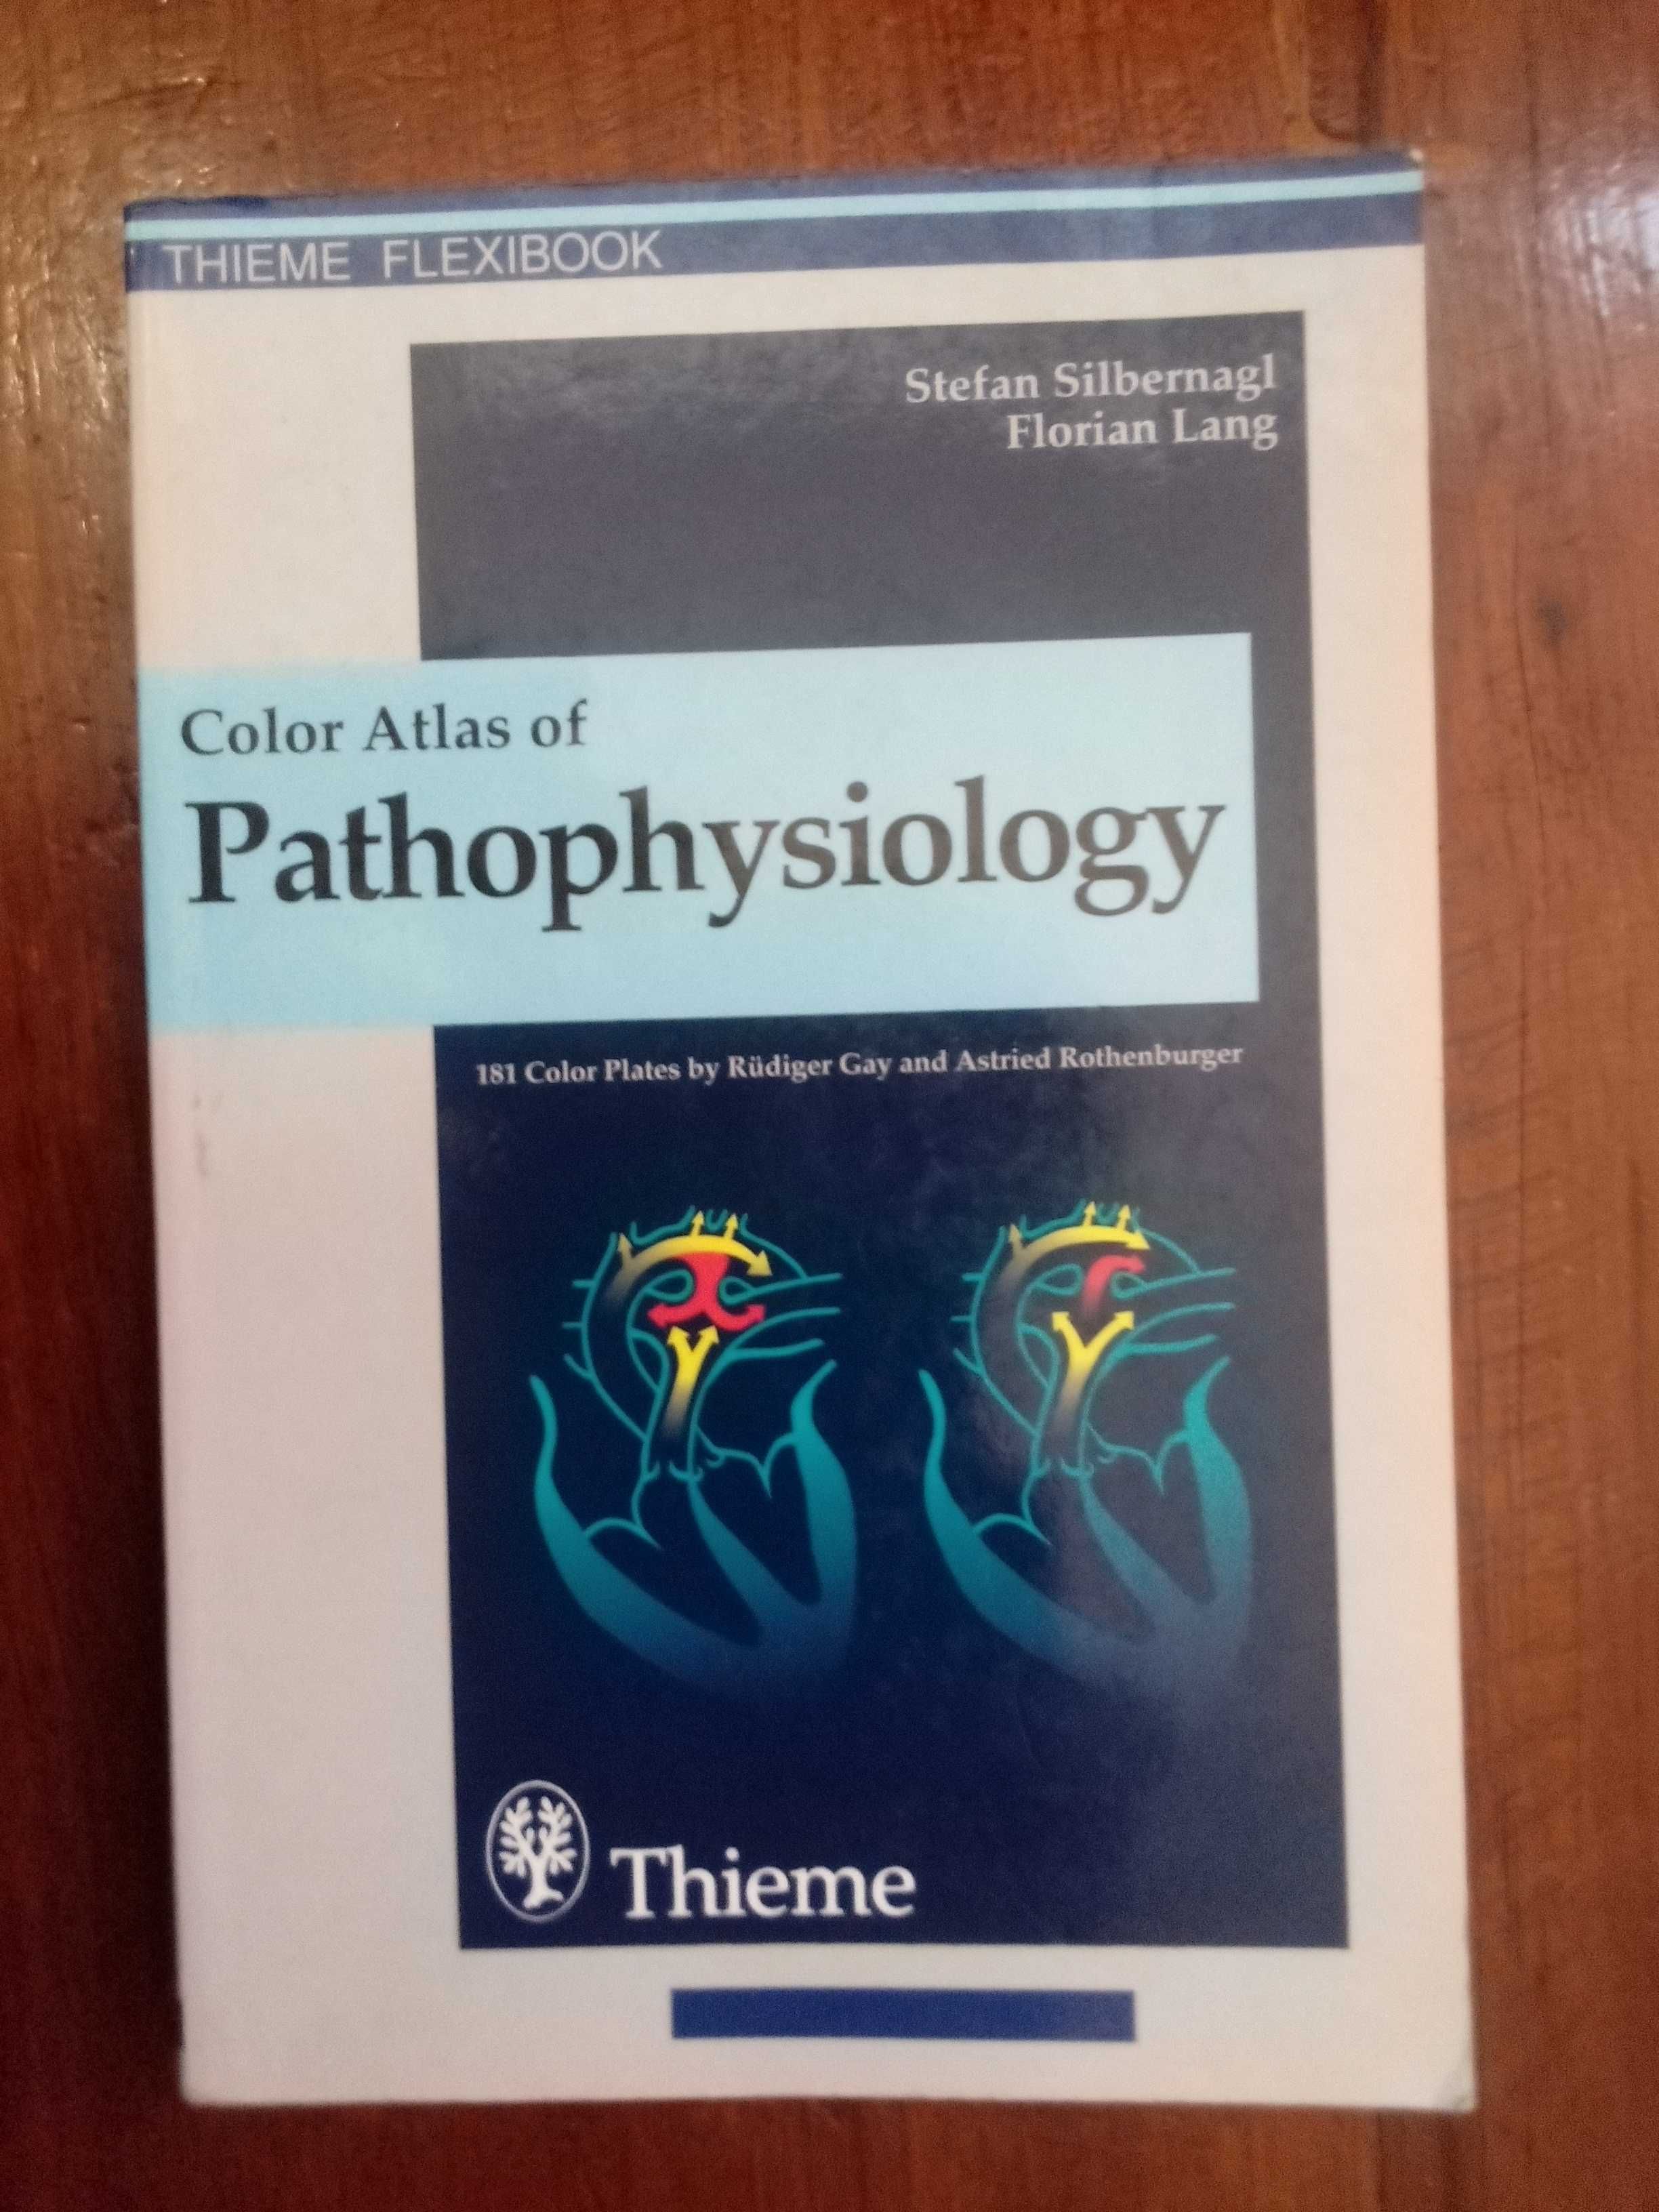 Stefan Silbernagl e Florian Lang - Color Atlas of Pathophysiology